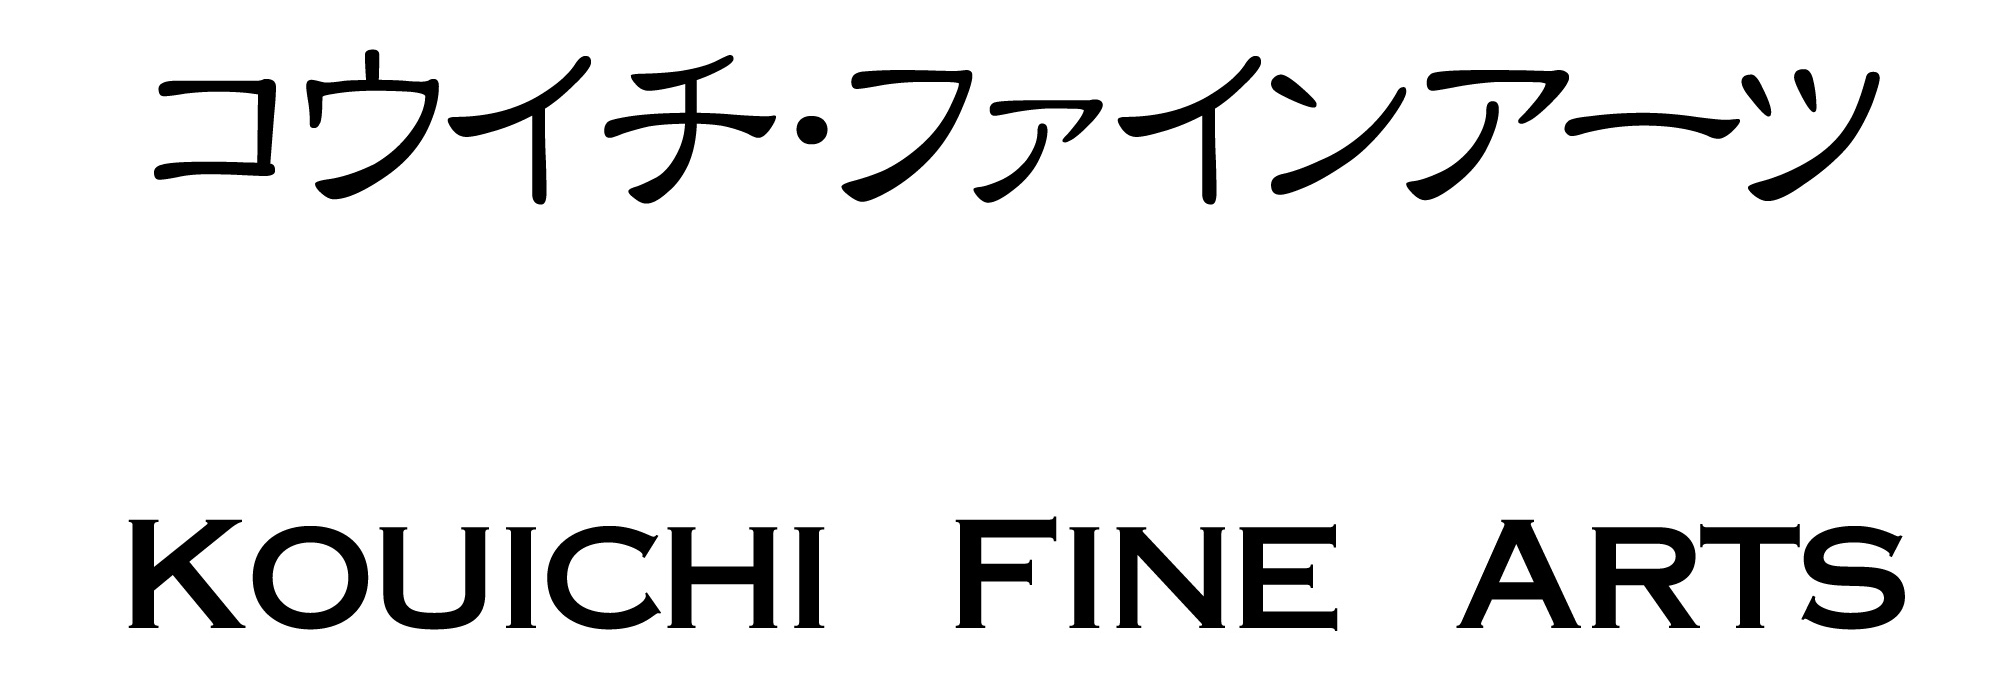 KOUICHI FINE ARTS